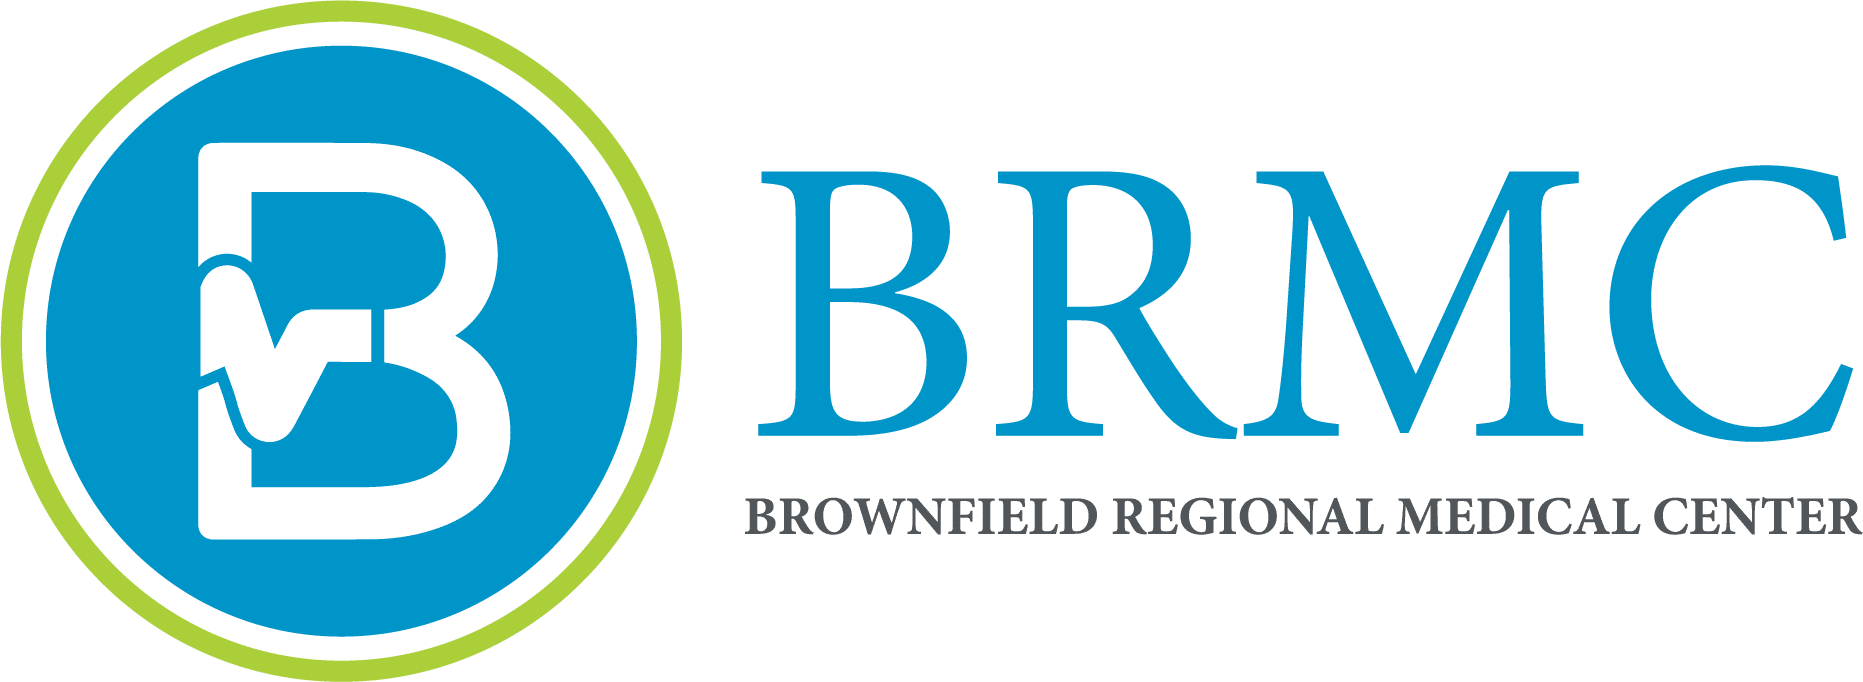 brownfield regional medical center